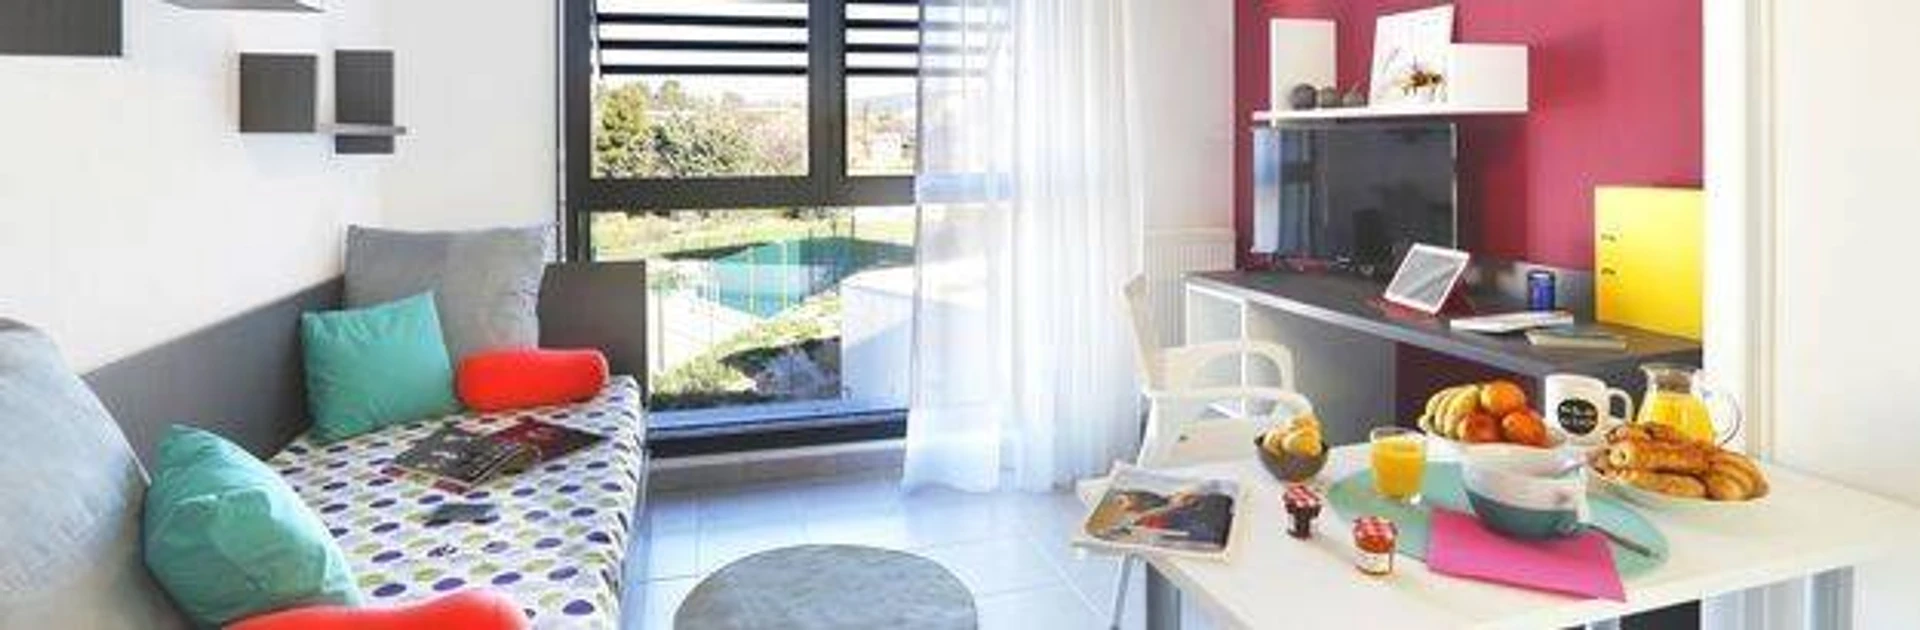 Bright private room in Aix-en-provence